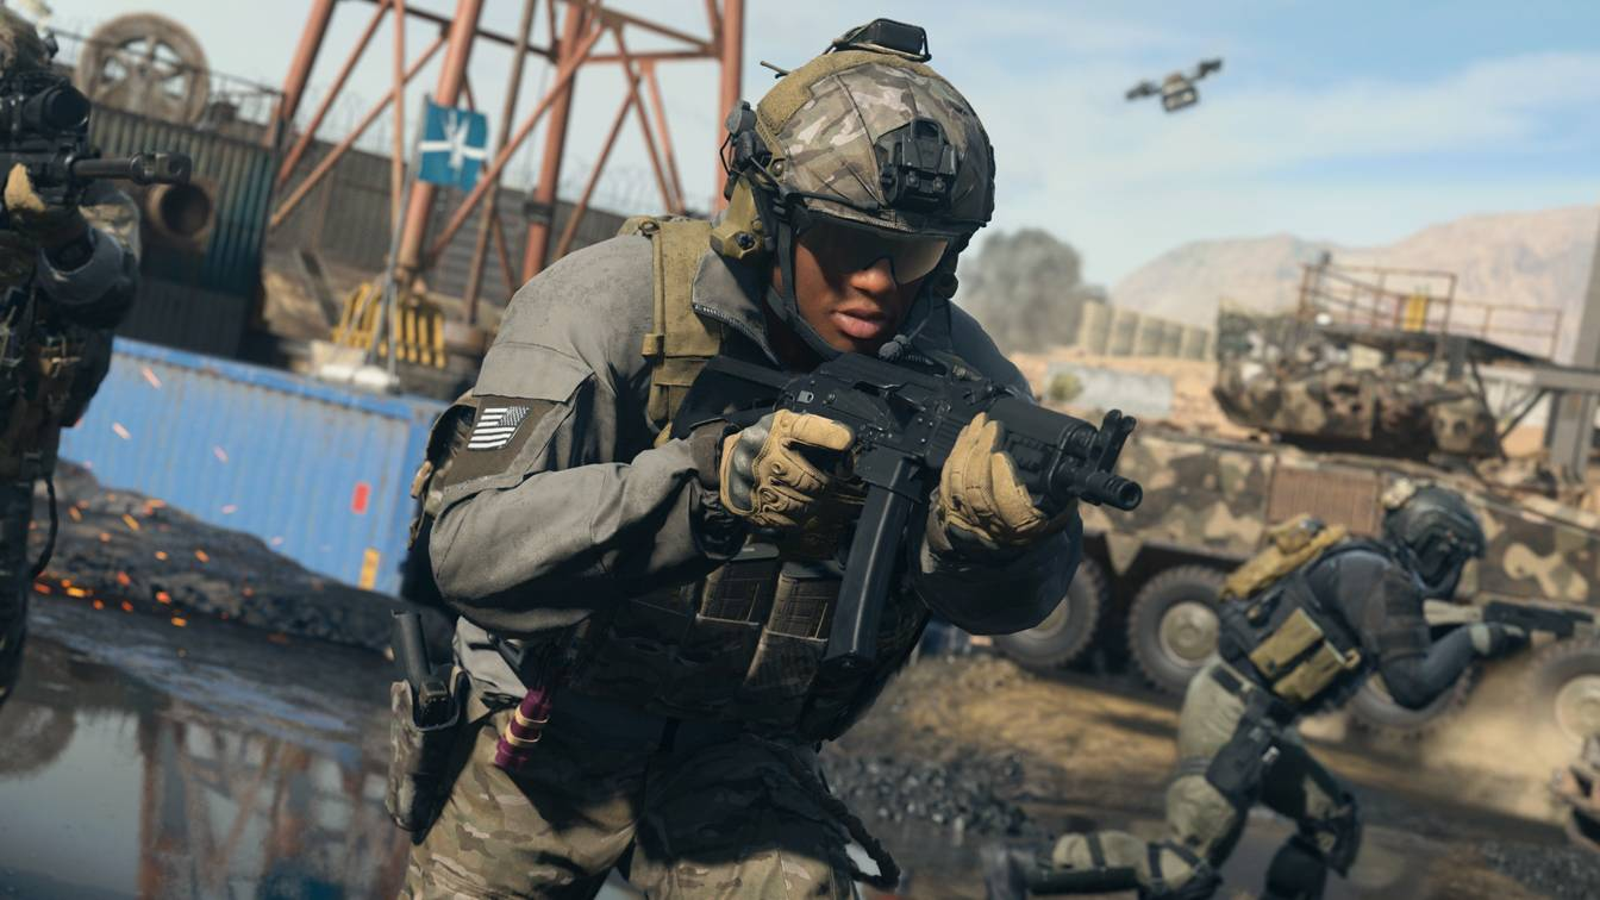 Call of Duty: Modern Warfare 2: Signature Series Guide